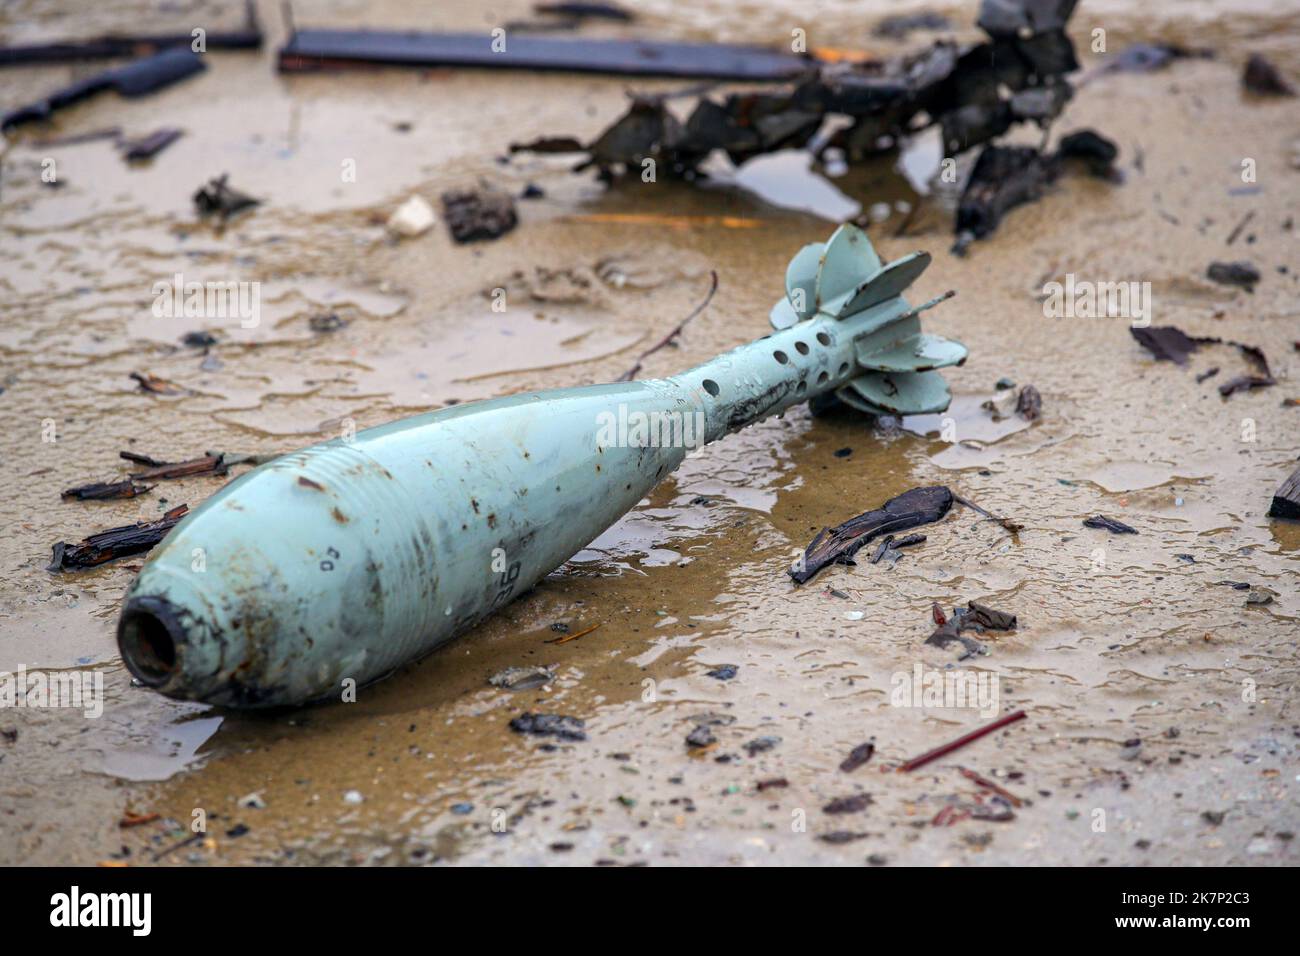 KHARKIV REGION, UKRAINE - OCTOBER 09, 2022 - A mortar mine found on the premises of an ammunition depot abandoned by the russian occupiers, Kharkiv Region, northeastern Ukraine. Stock Photo